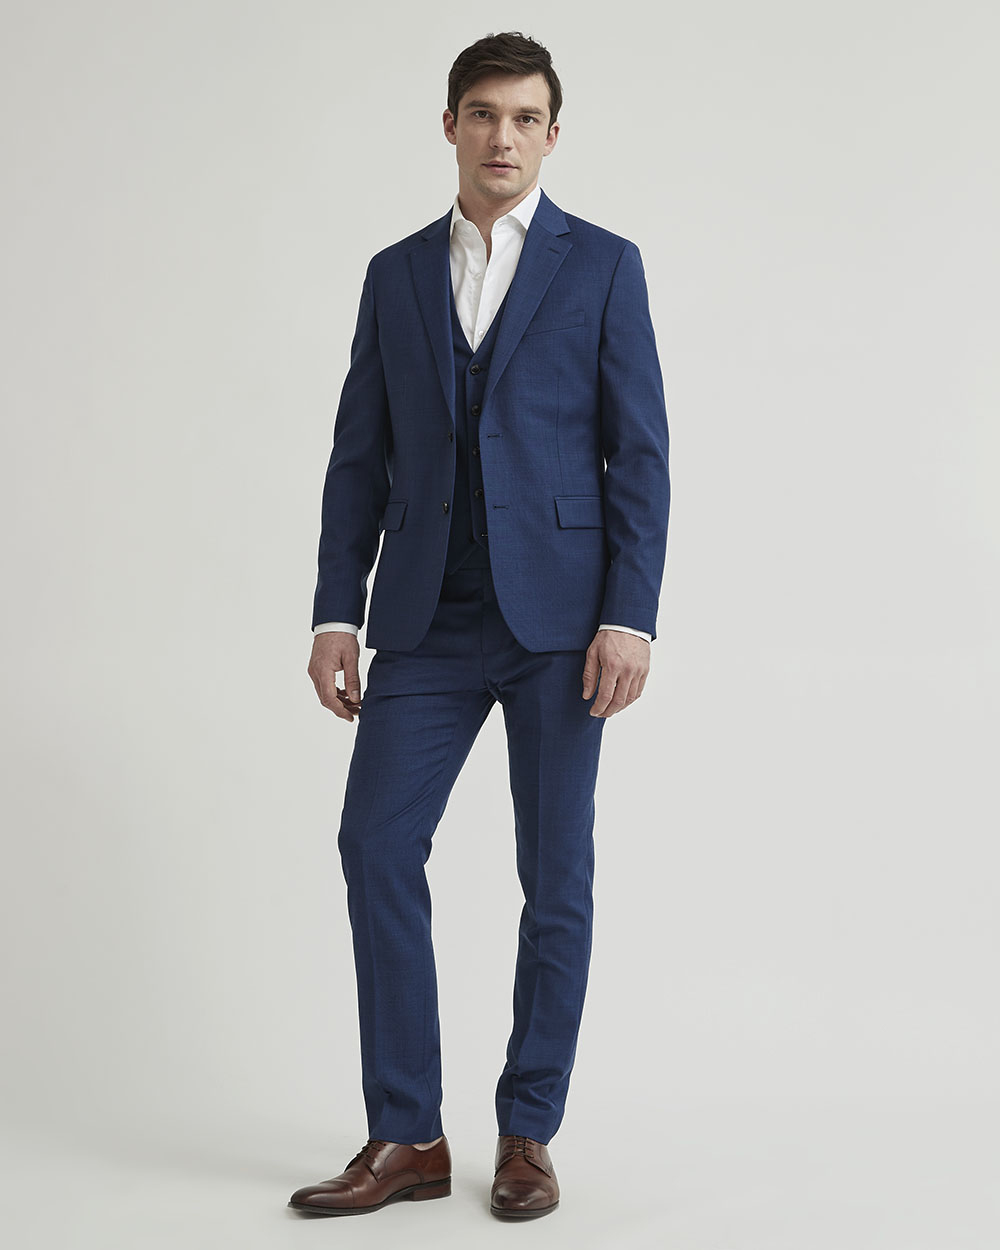 Medium Blue 3-Piece Suit